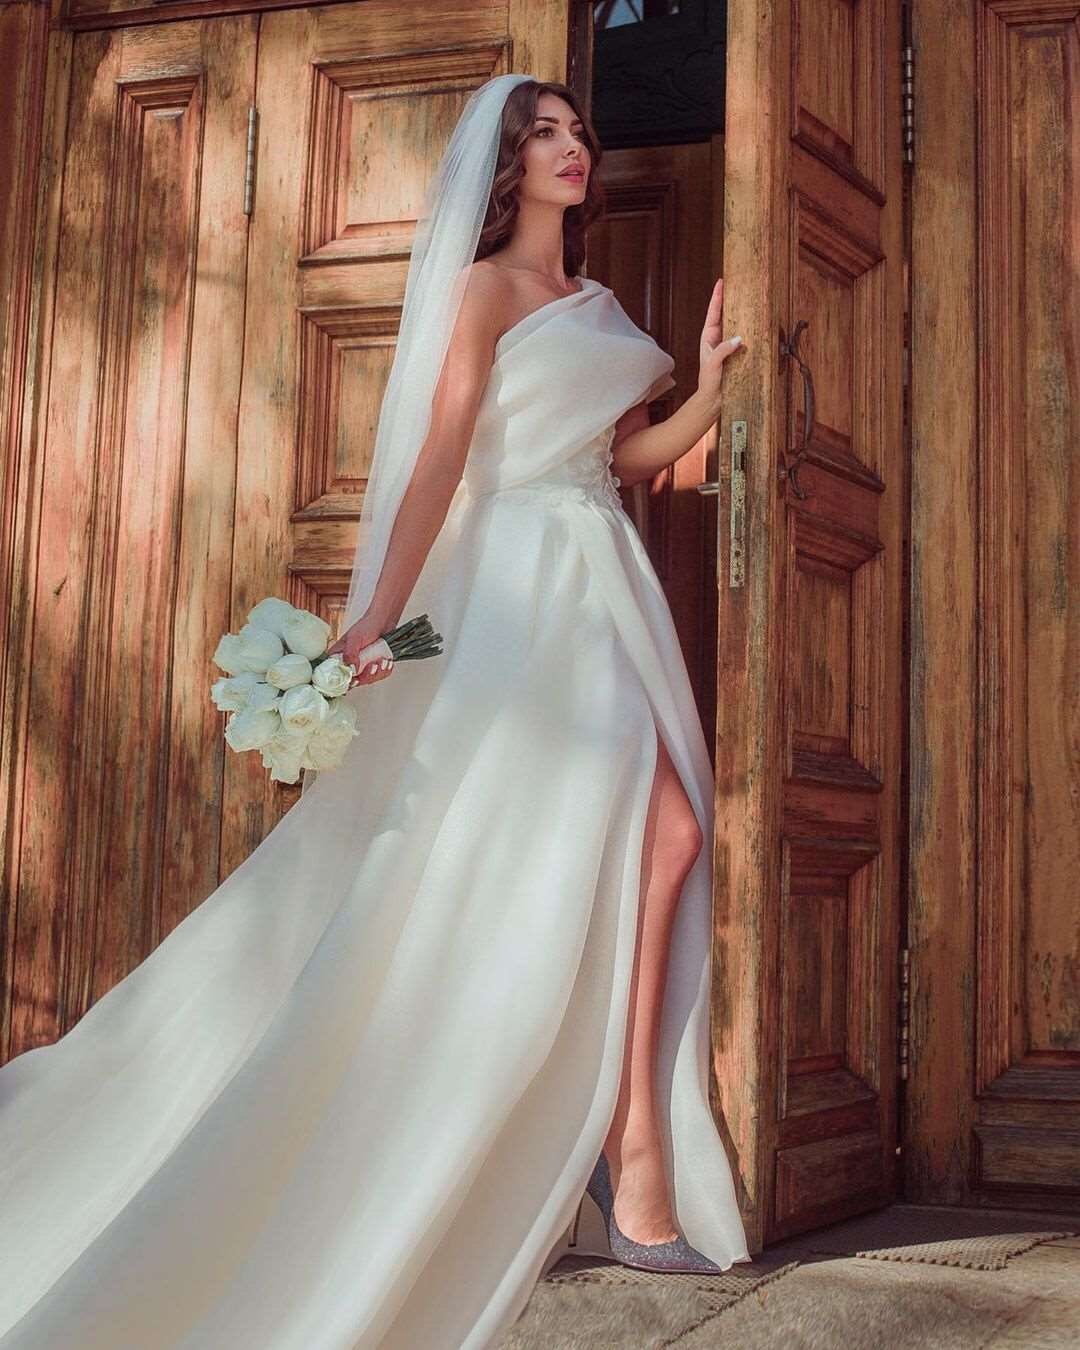 "Anastasia" One Shoulder White Wedding Dress With High Side Split